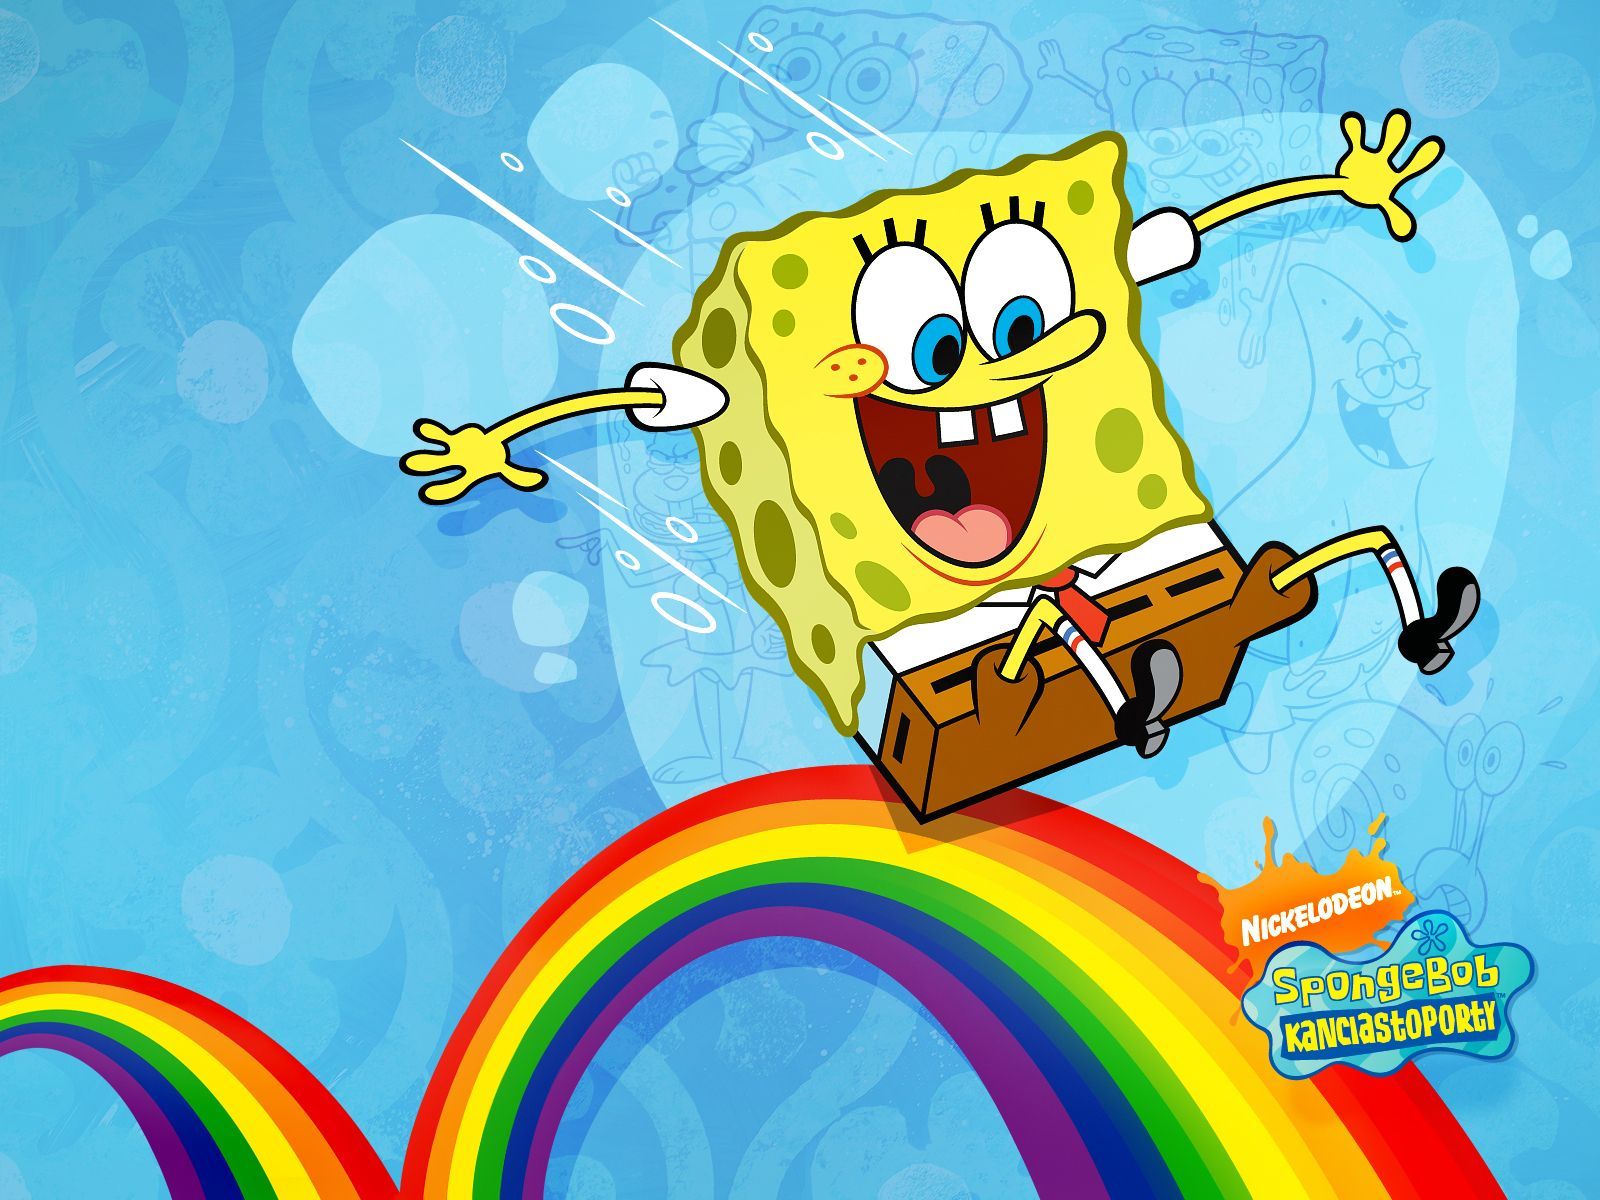 Spongebob Squarepants Wallpaper: Rainbow. Spongebob wallpaper, Spongebob square, Spongebob